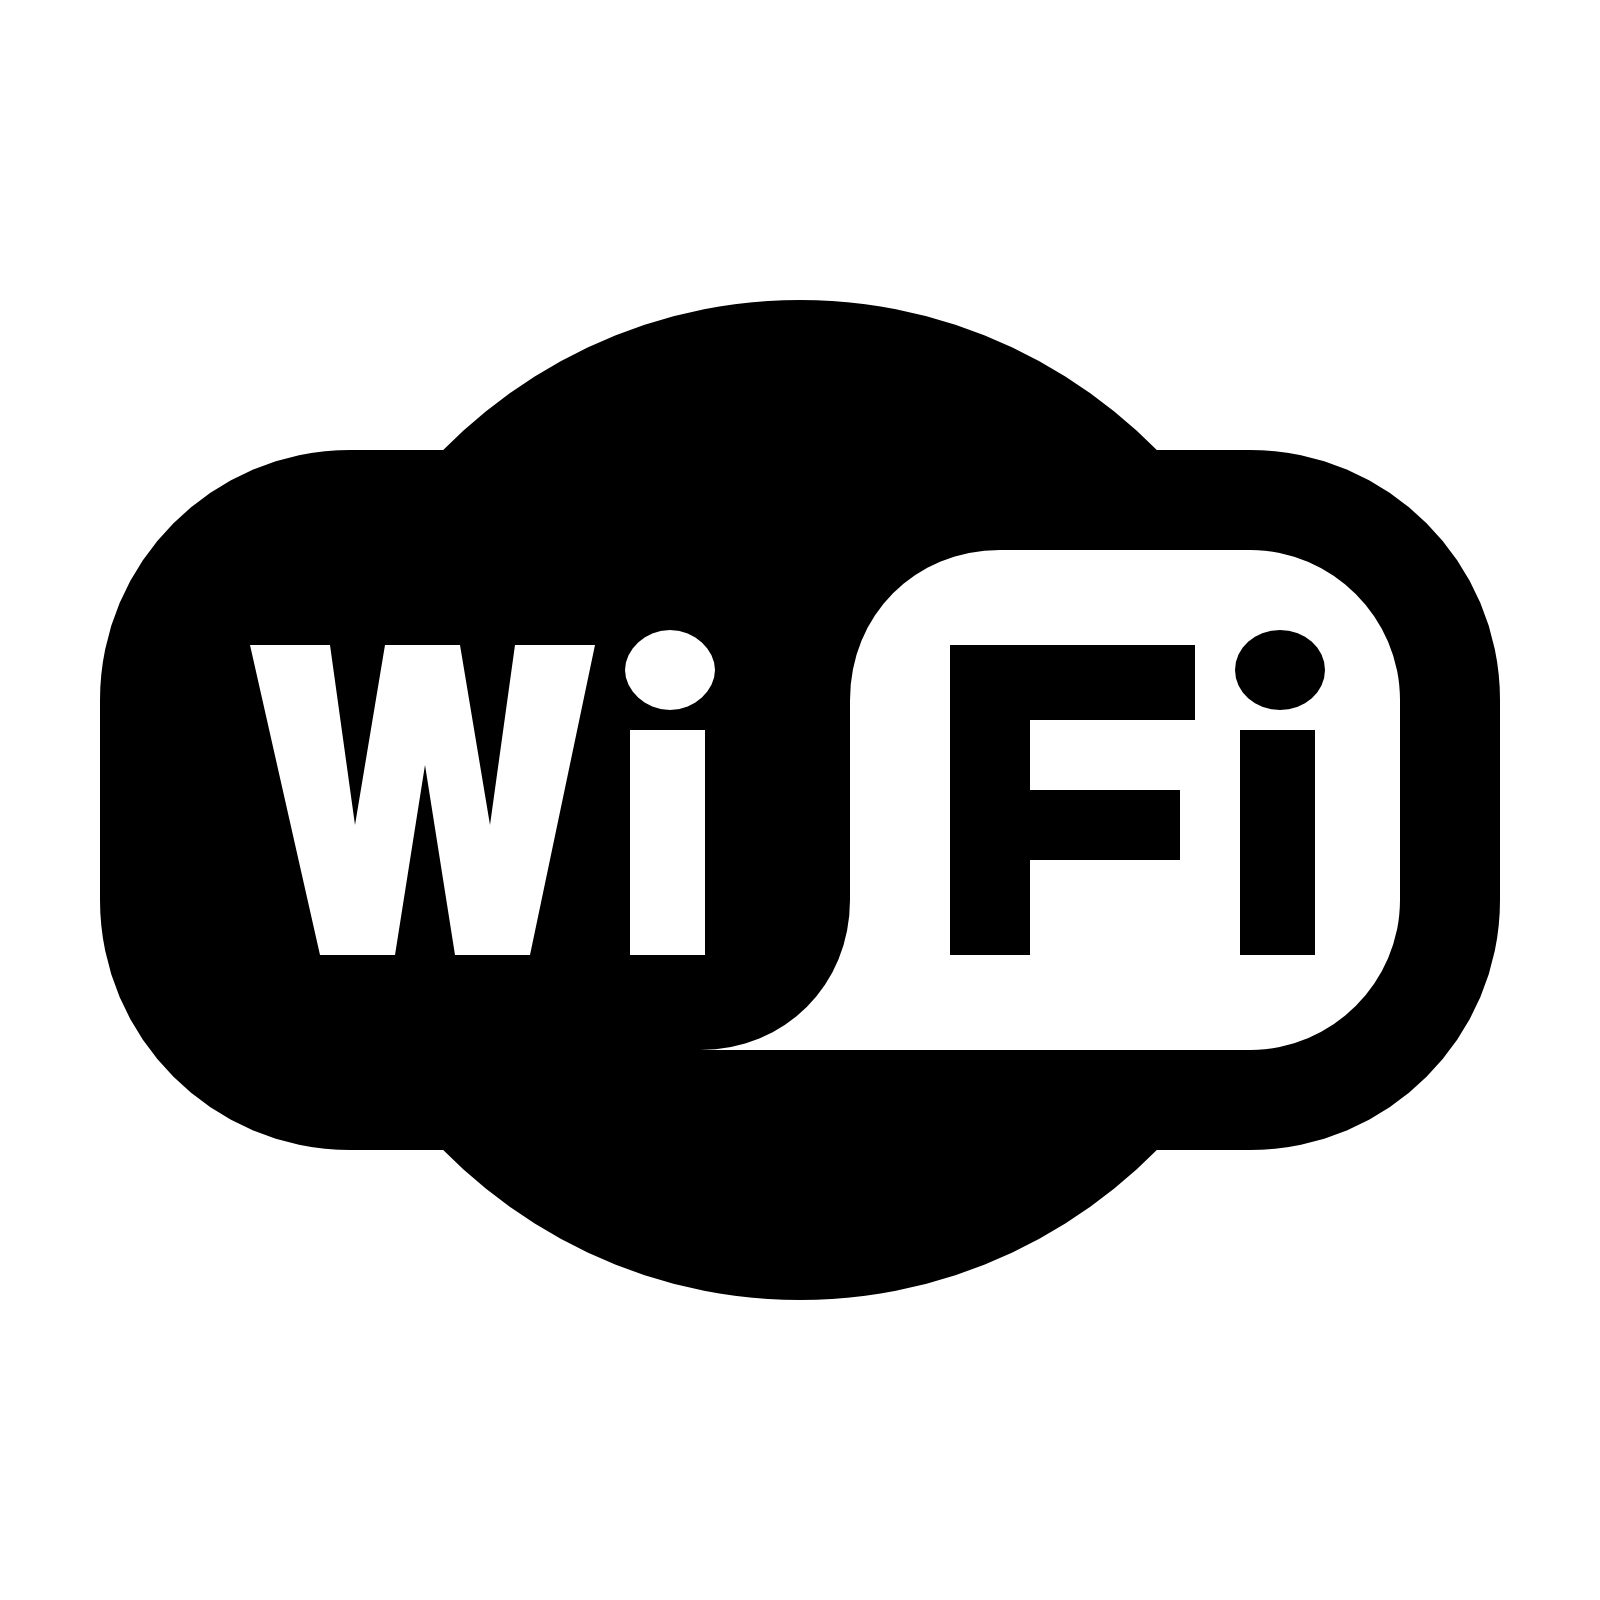 Fi Logo - Wifi PNG Transparent Wifi.PNG Images. | PlusPNG